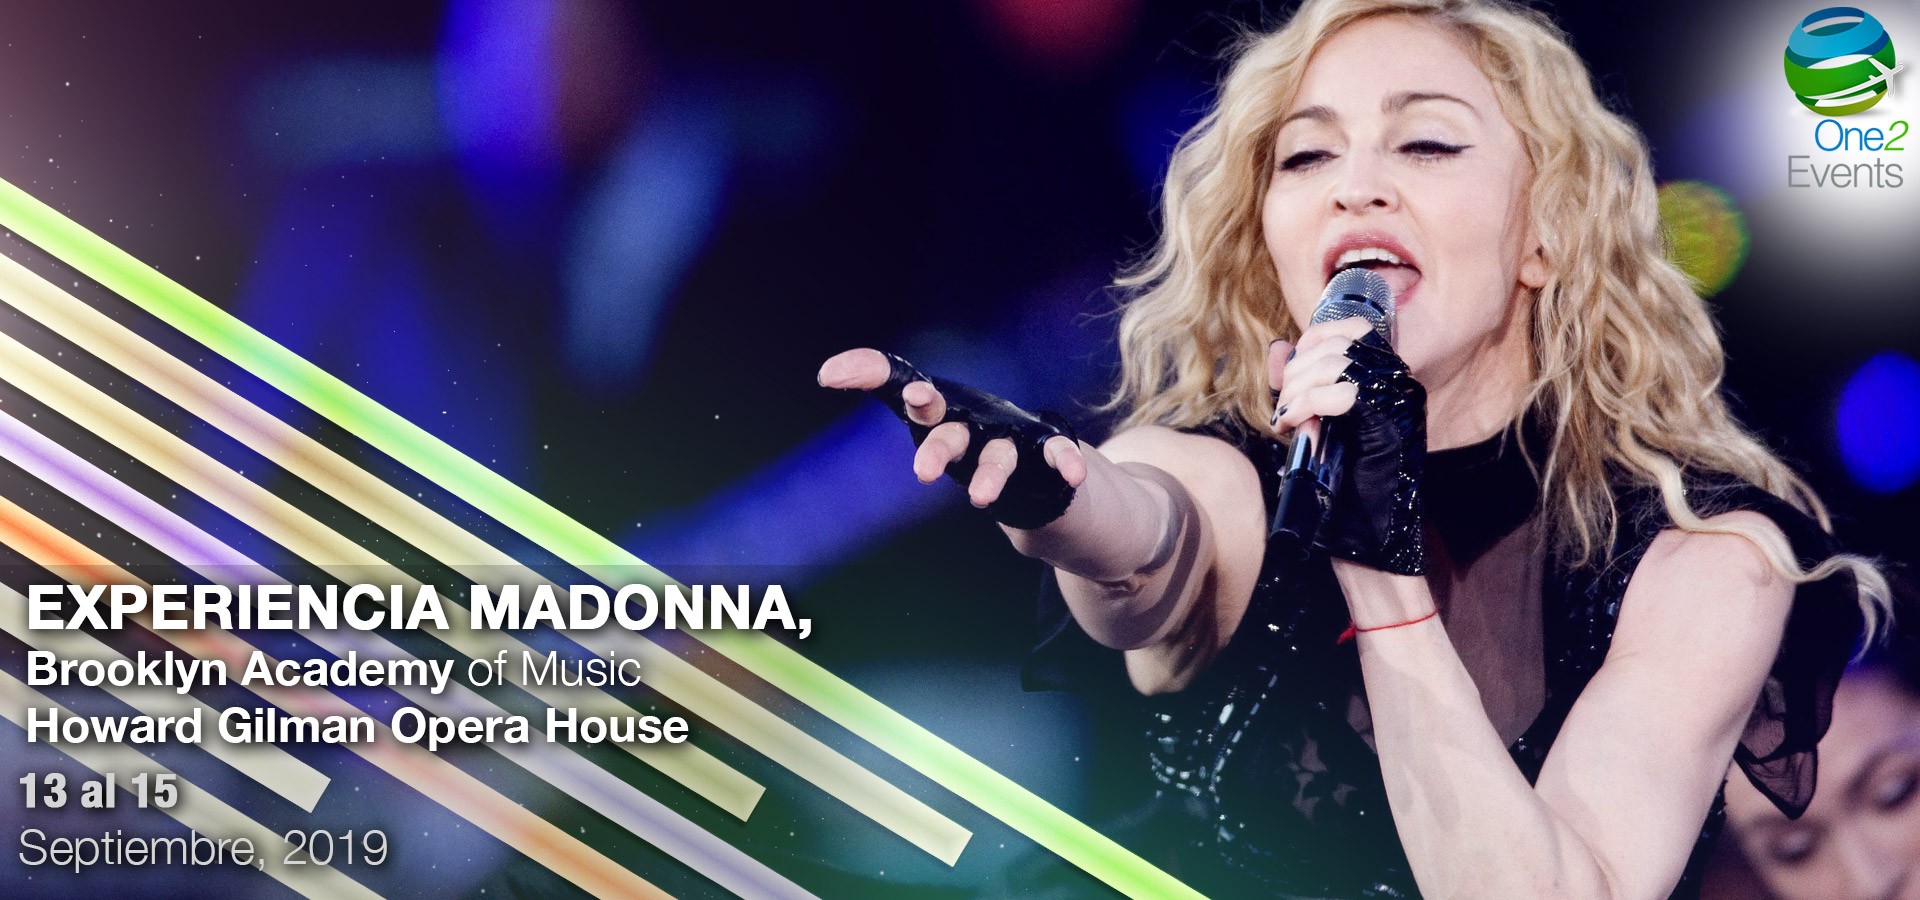 Experiencia Madonna, Brooklyn Academy of Music